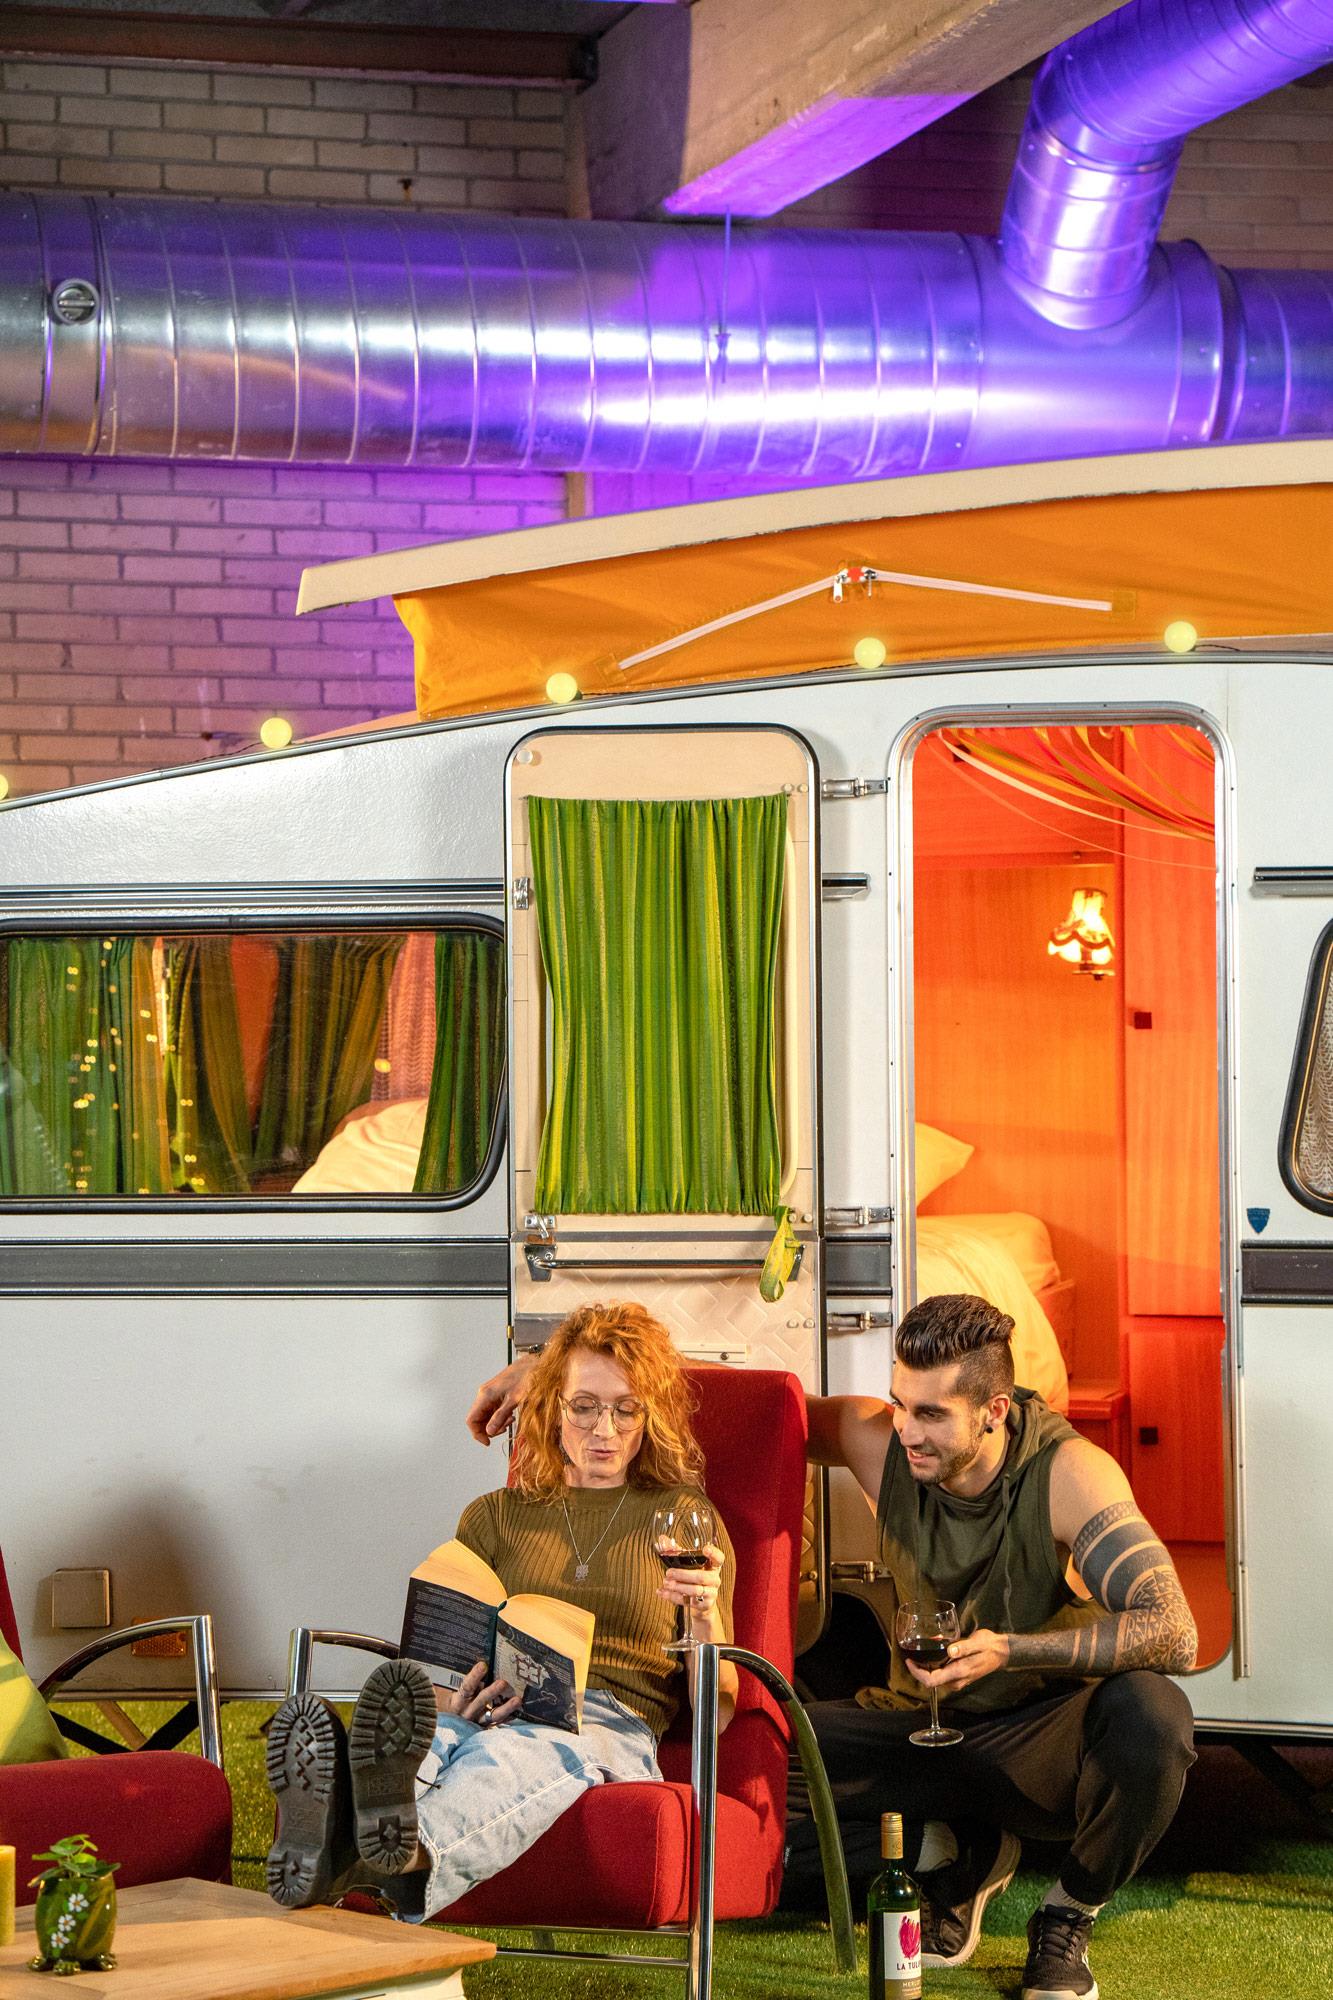 caravan classic fantastic Outside Inn Amsterdam indoor camping vert